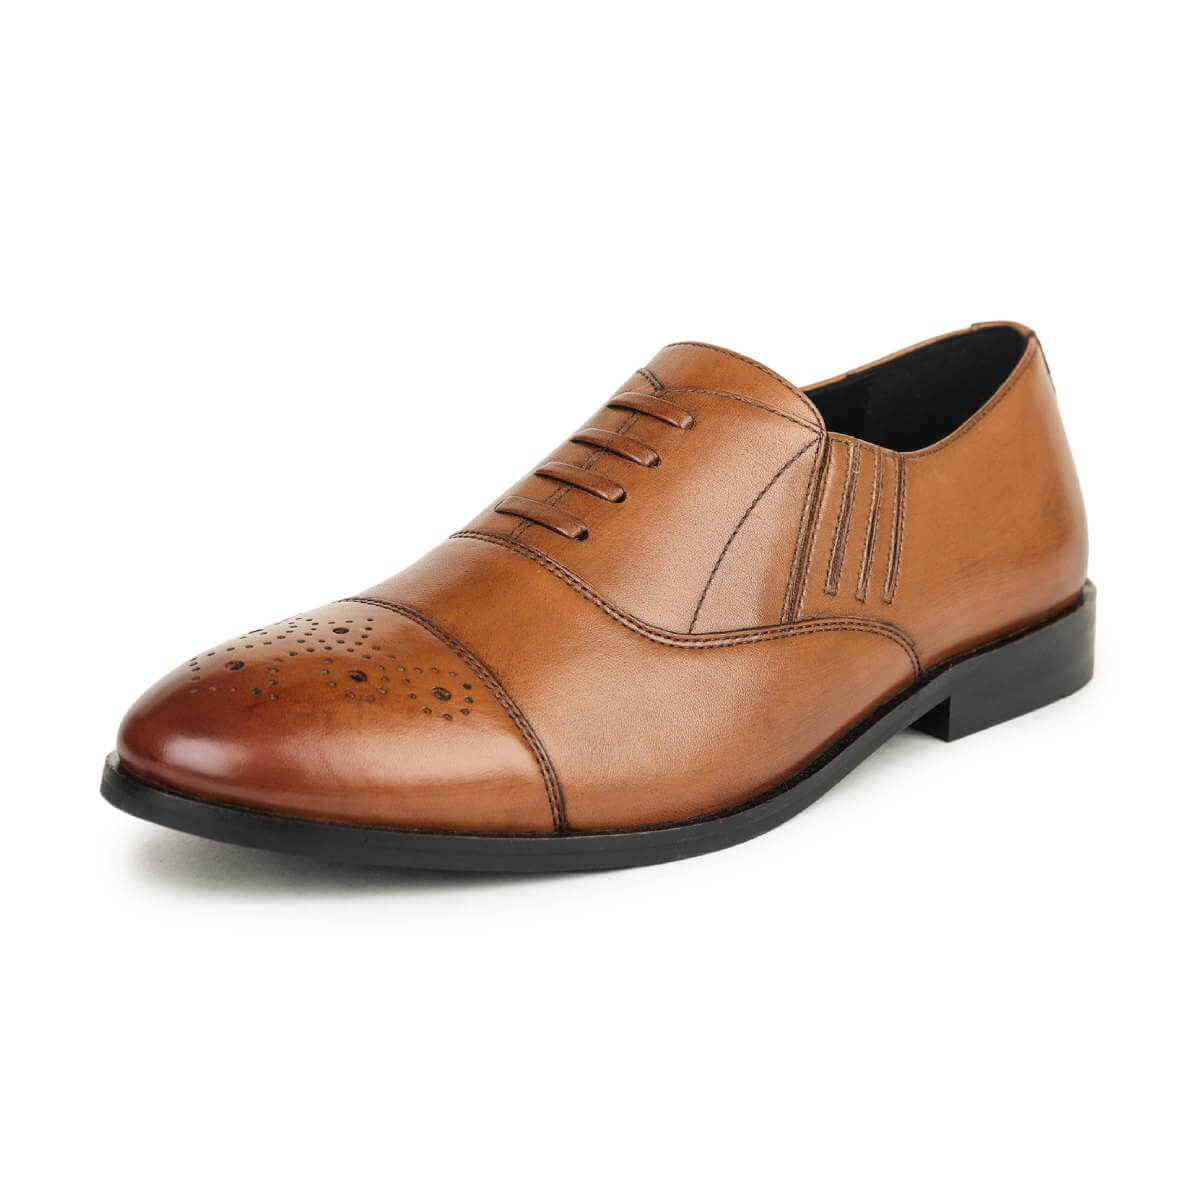  brogue shoes formal tan1